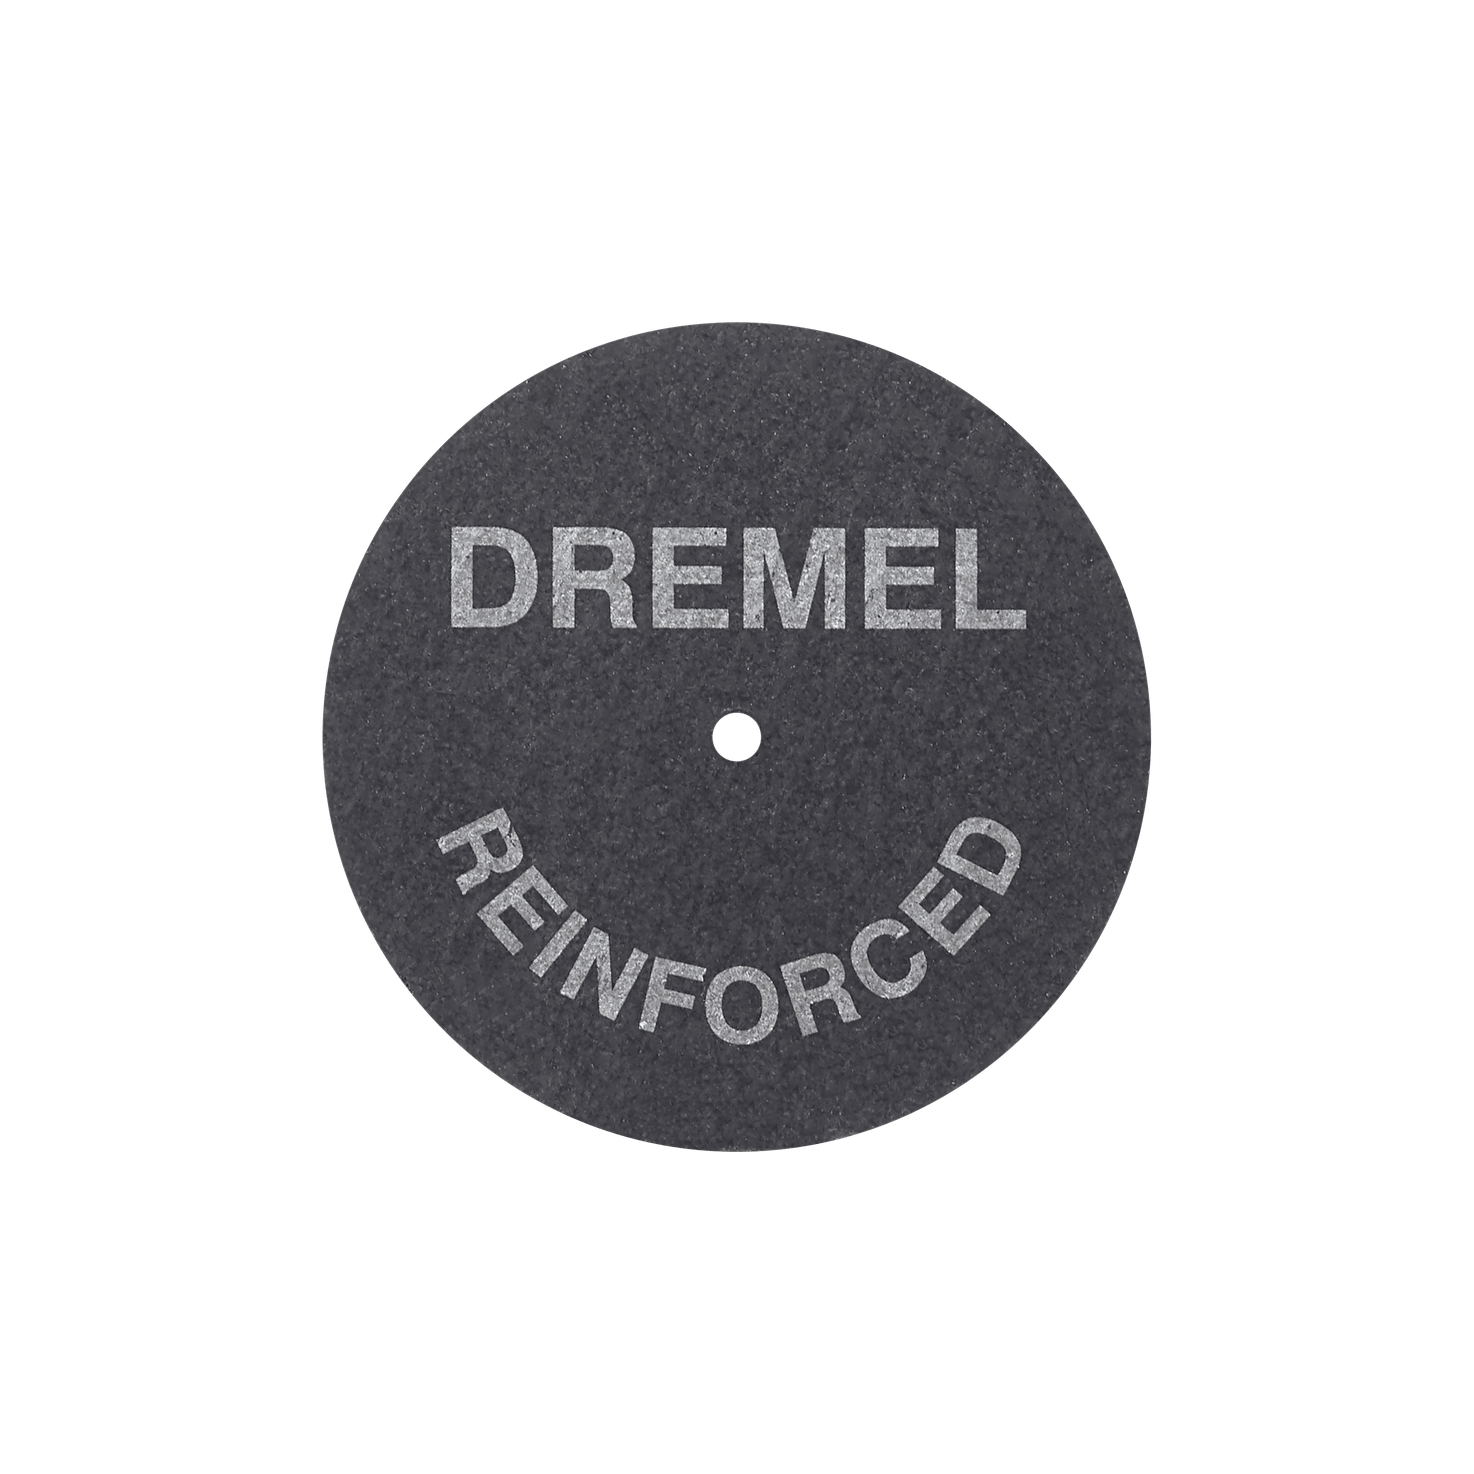 Dremel 8220 Series 12-Volt MAX Lithium-Ion Variable Speed Cordless